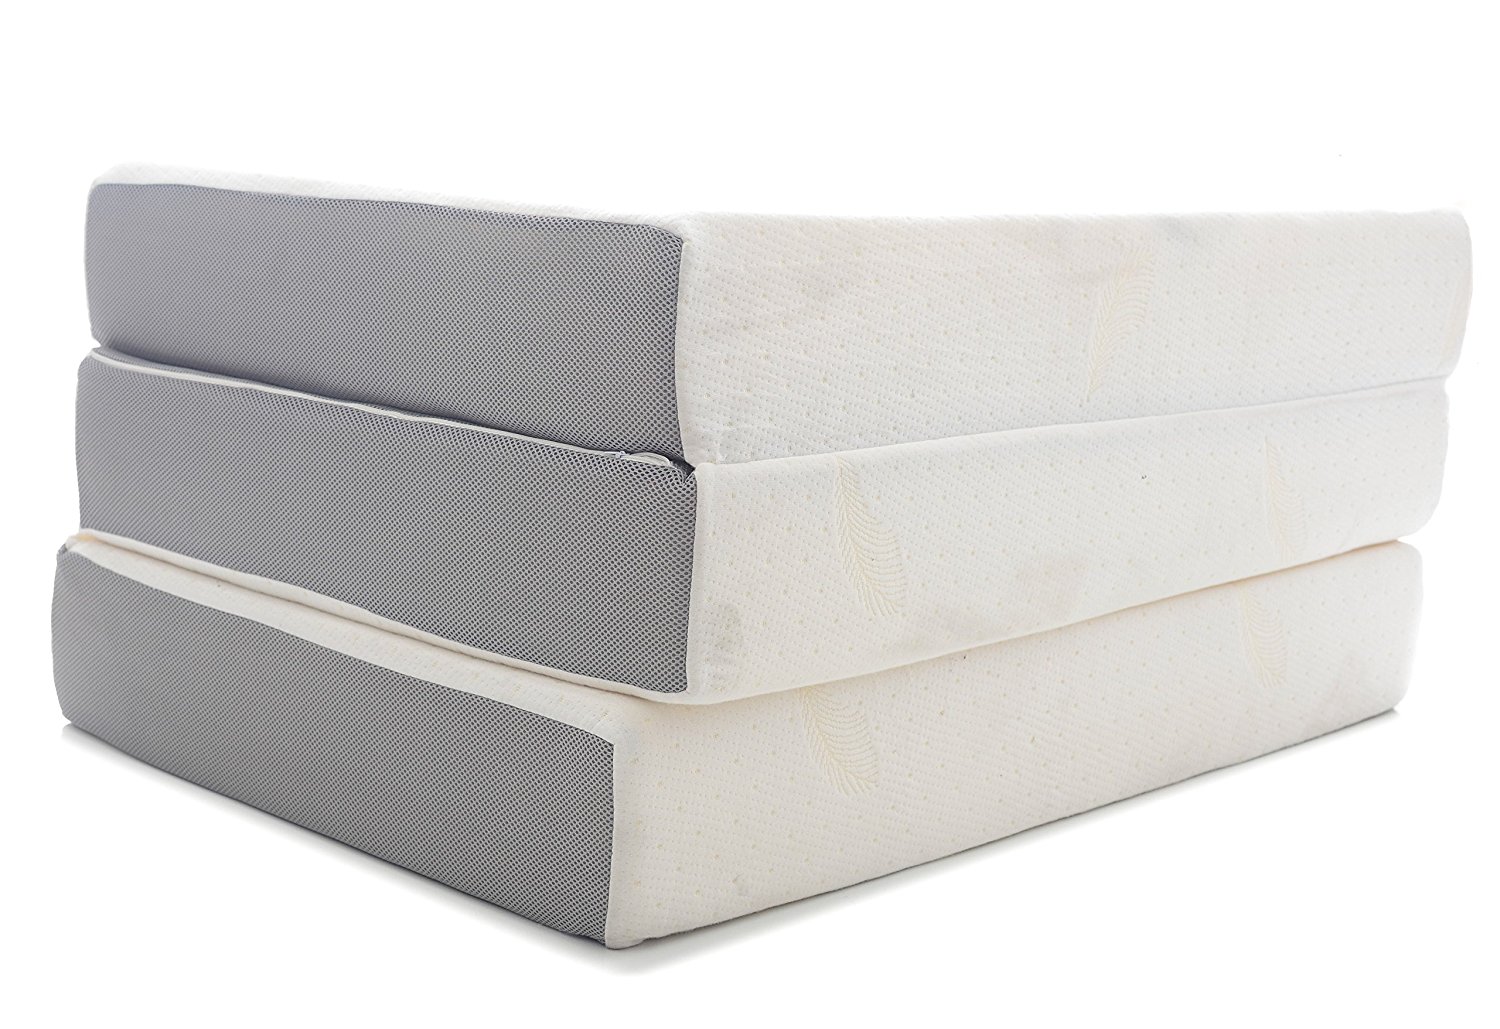 6 inch folding mattress